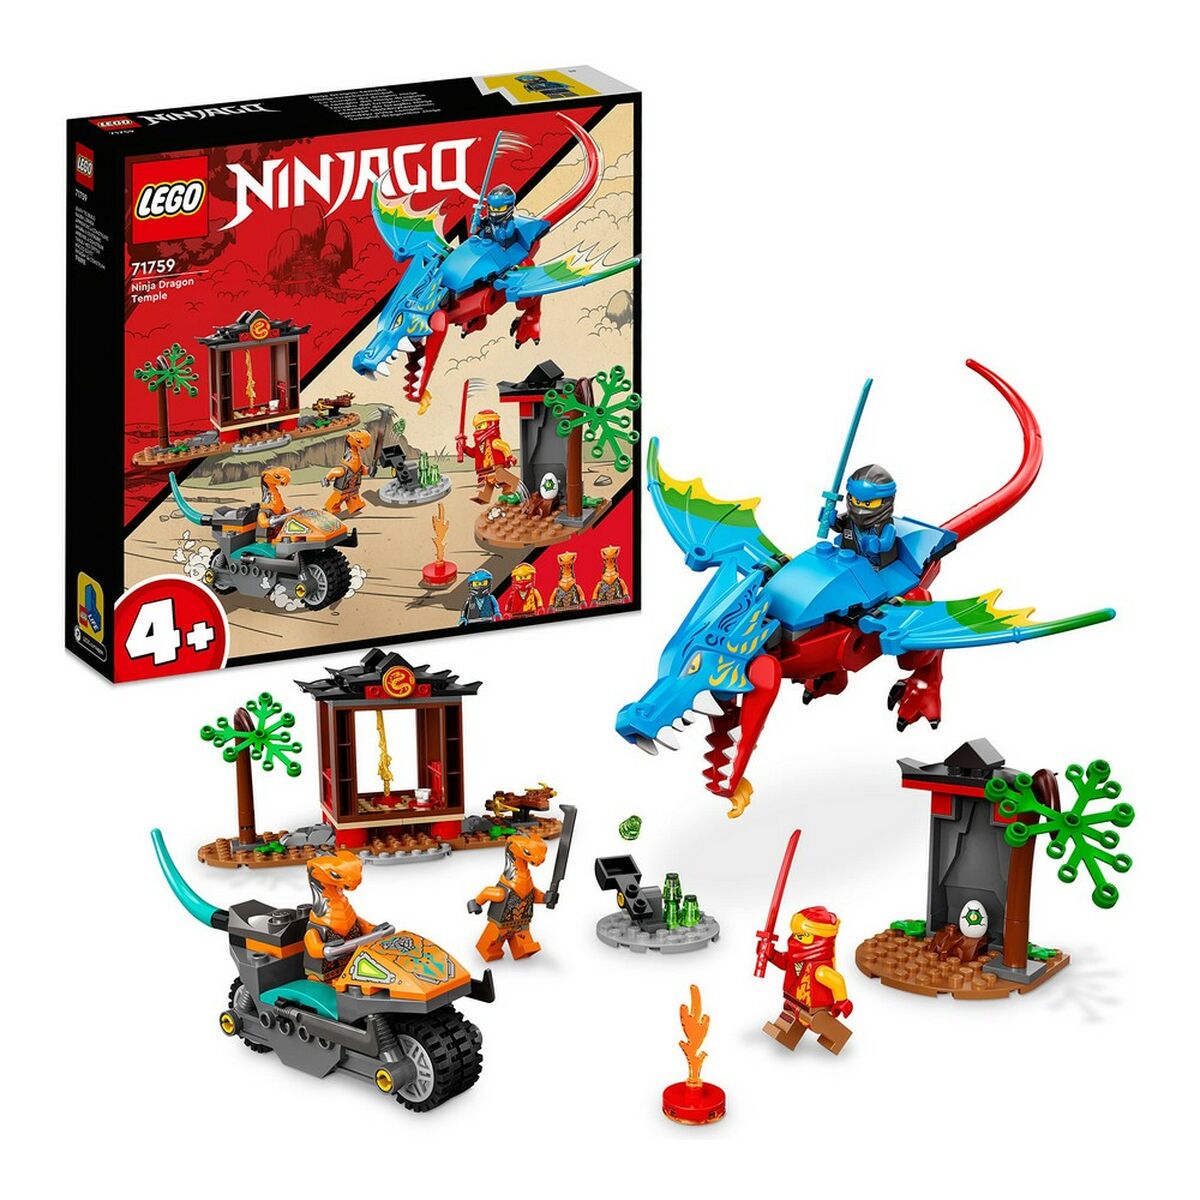 Playset Lego Ninjago Ninja Dragon Temple 161 Pieces 71759